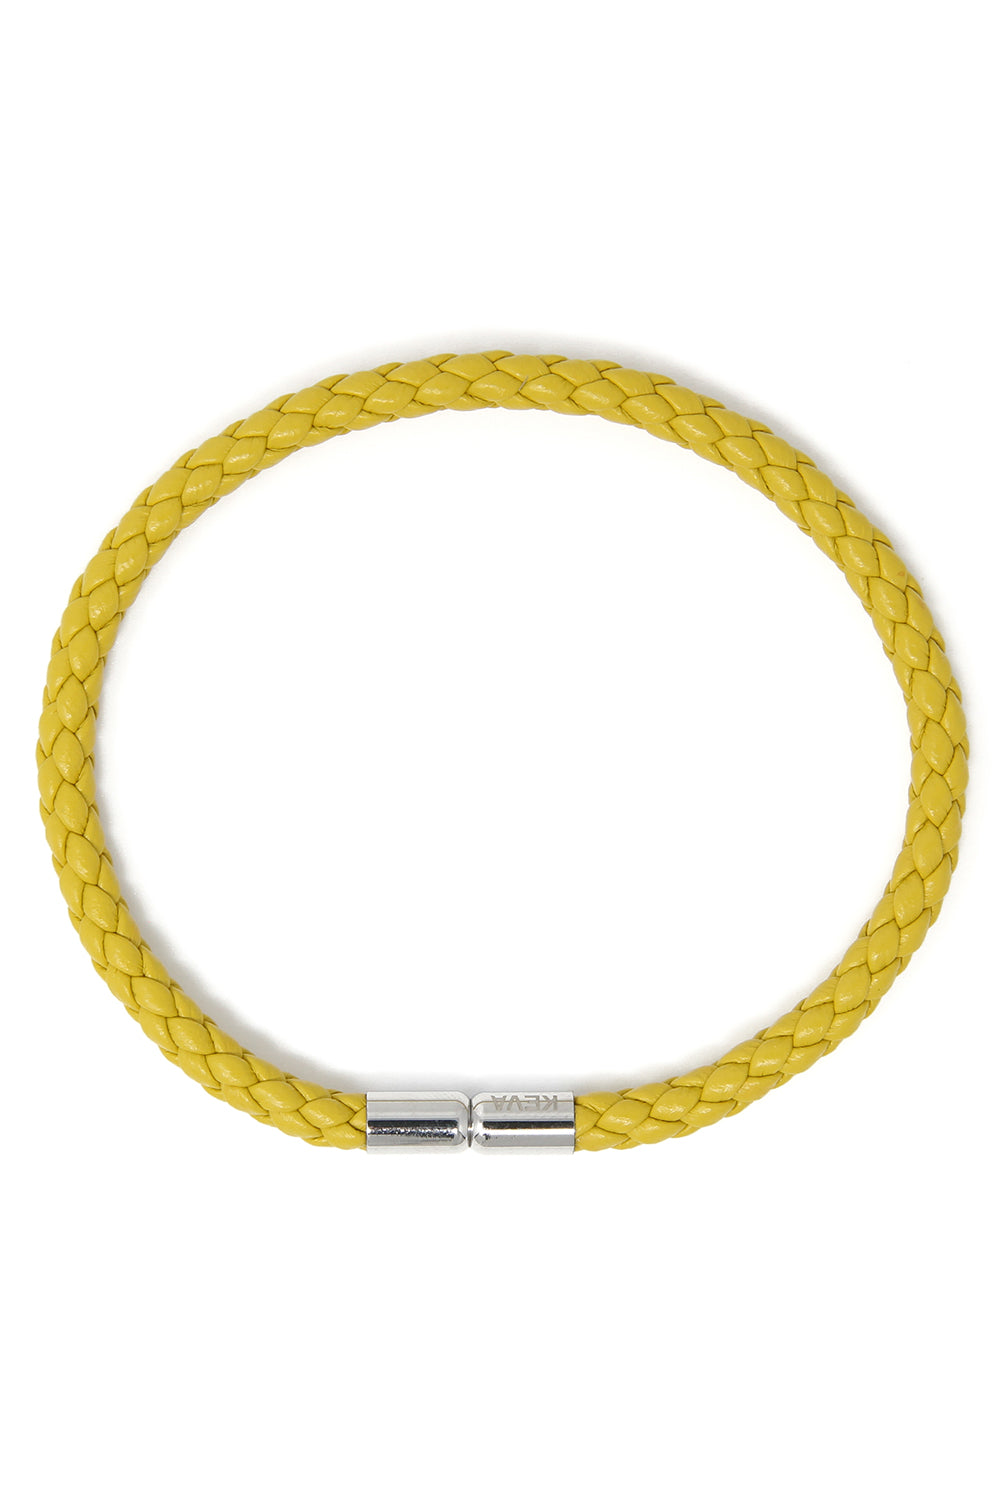 SIDEWALK SALE ITEM - Keva Braided Bracelet - Yellow